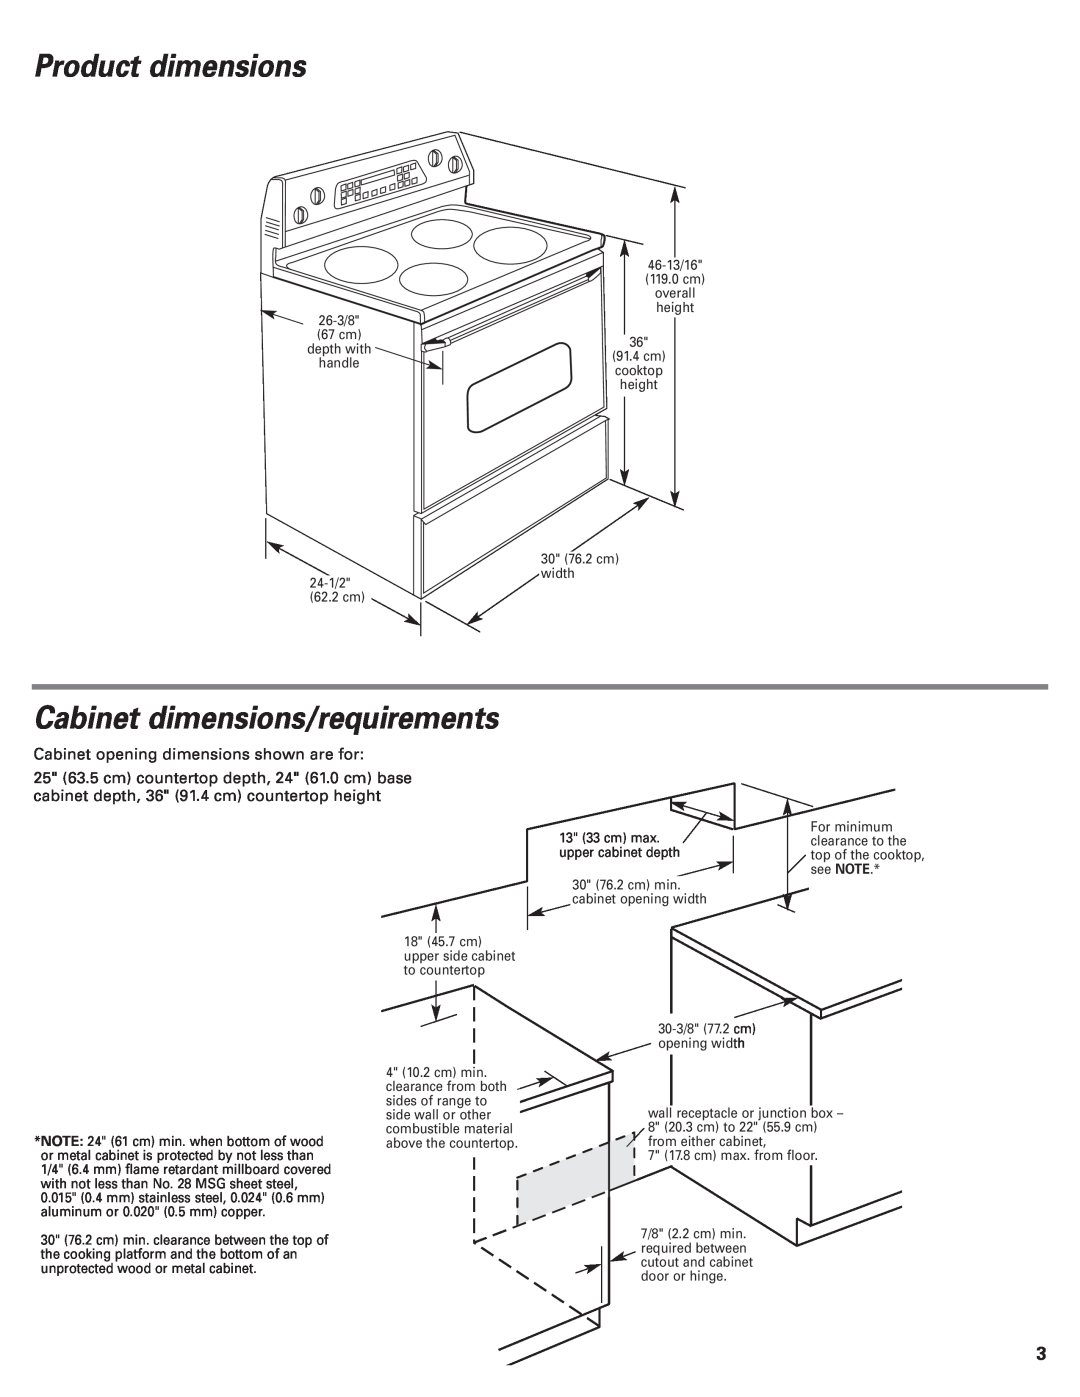 KitchenAid 9.76E+13 Product dimensions, Cabinet dimensions/requirements, Cabinet opening dimensions shown are for 